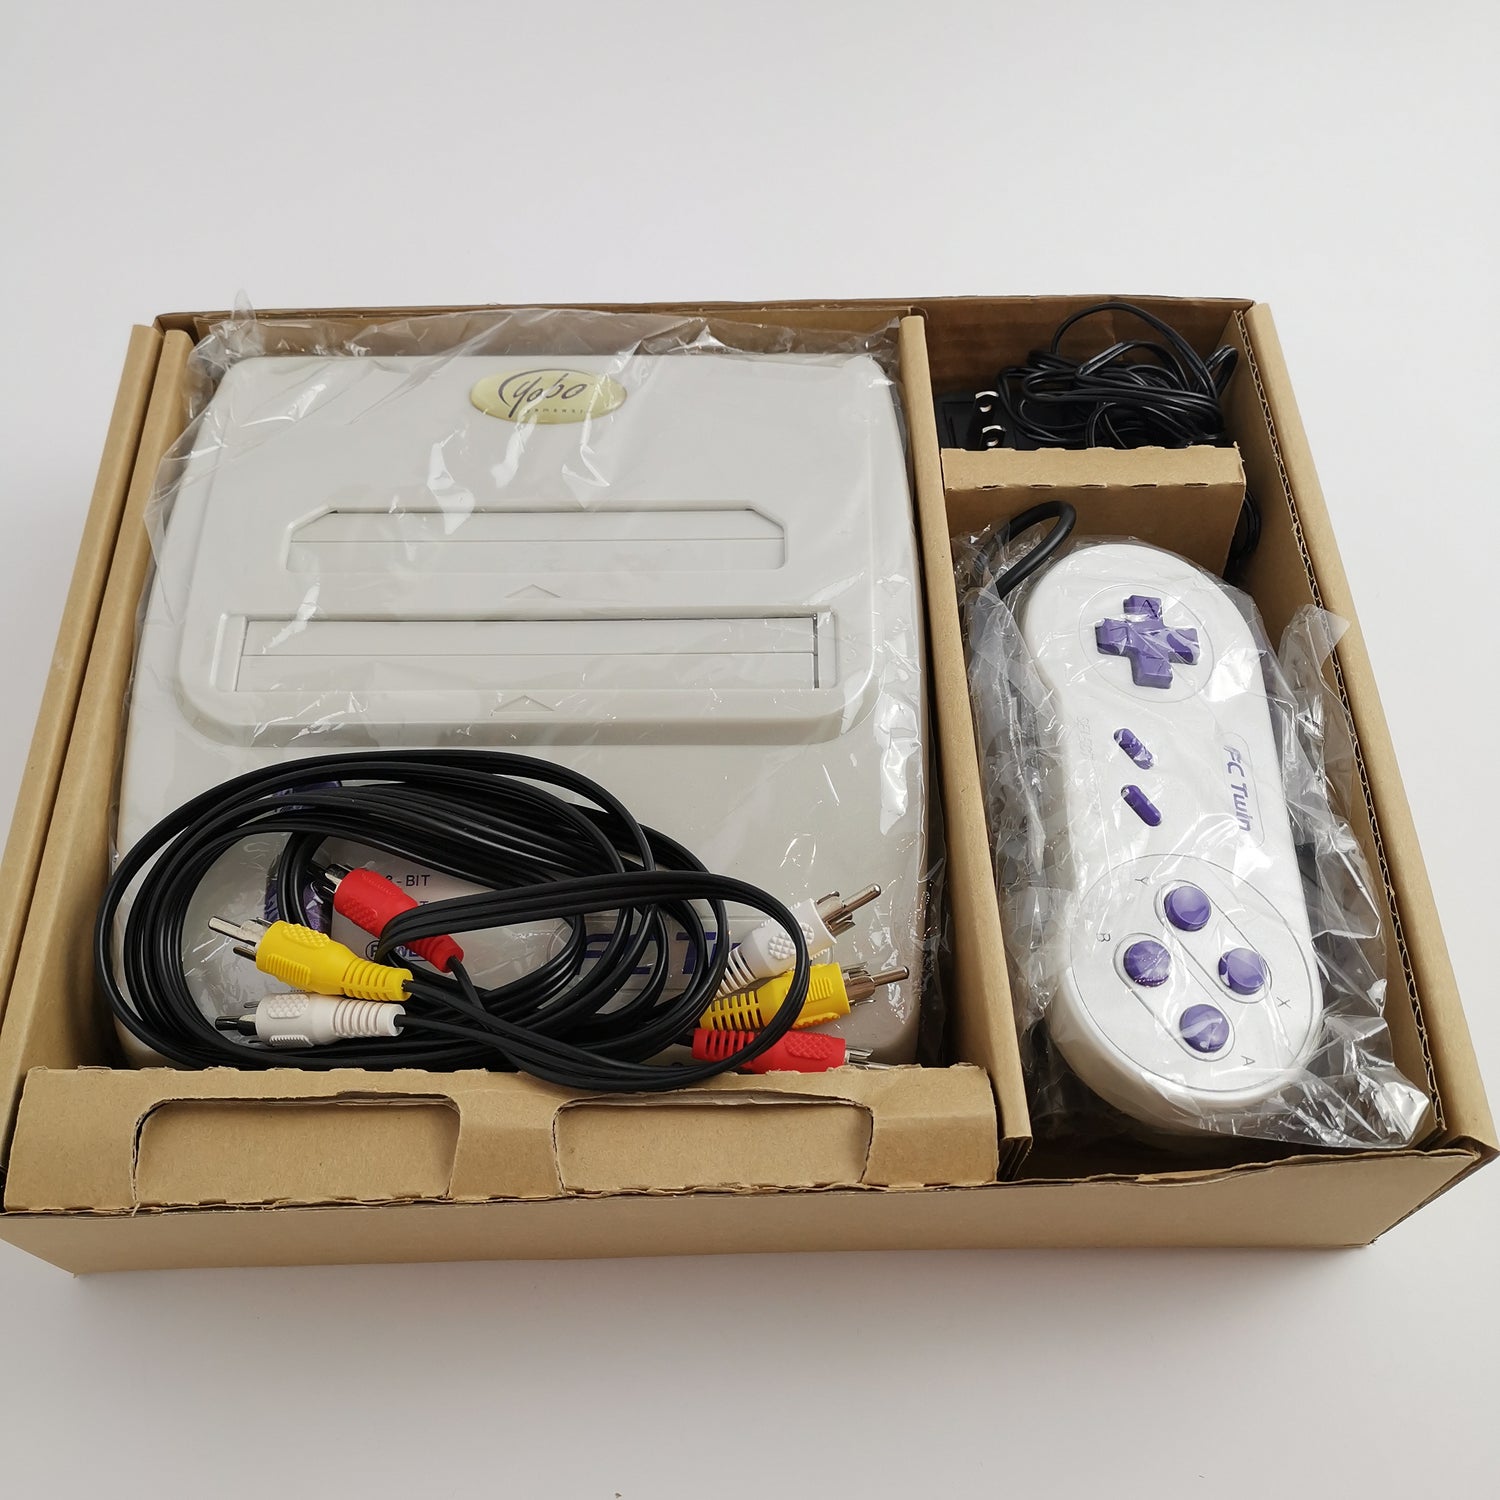 FC Twin Video Game System - 8-Bit & 16-Bit | Yobo original packaging